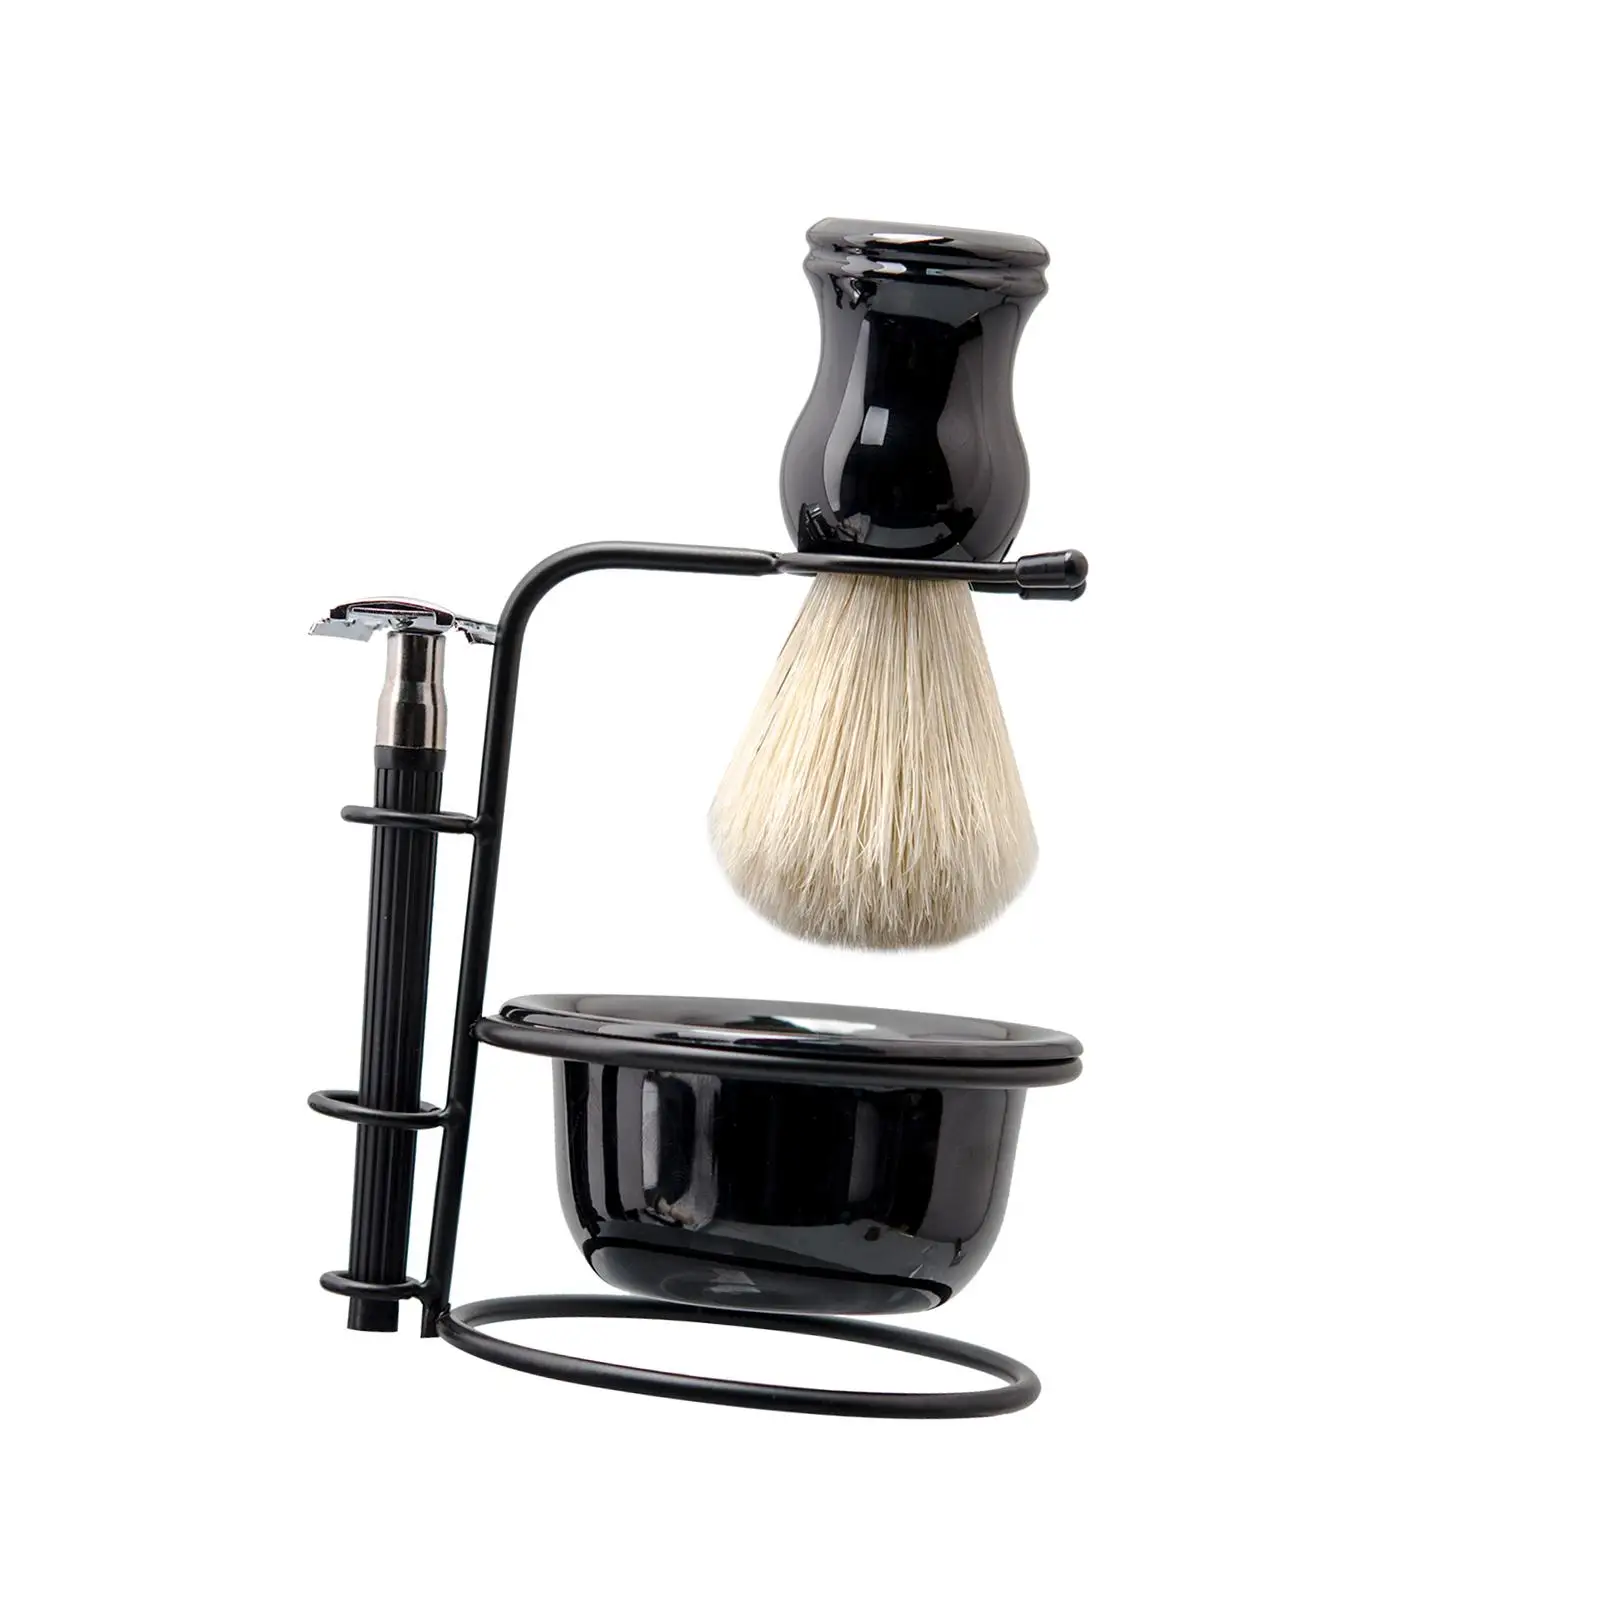 4 in 1 Shaving Set Premium Soap Bowl and Manual Mens Razor Brush Holder